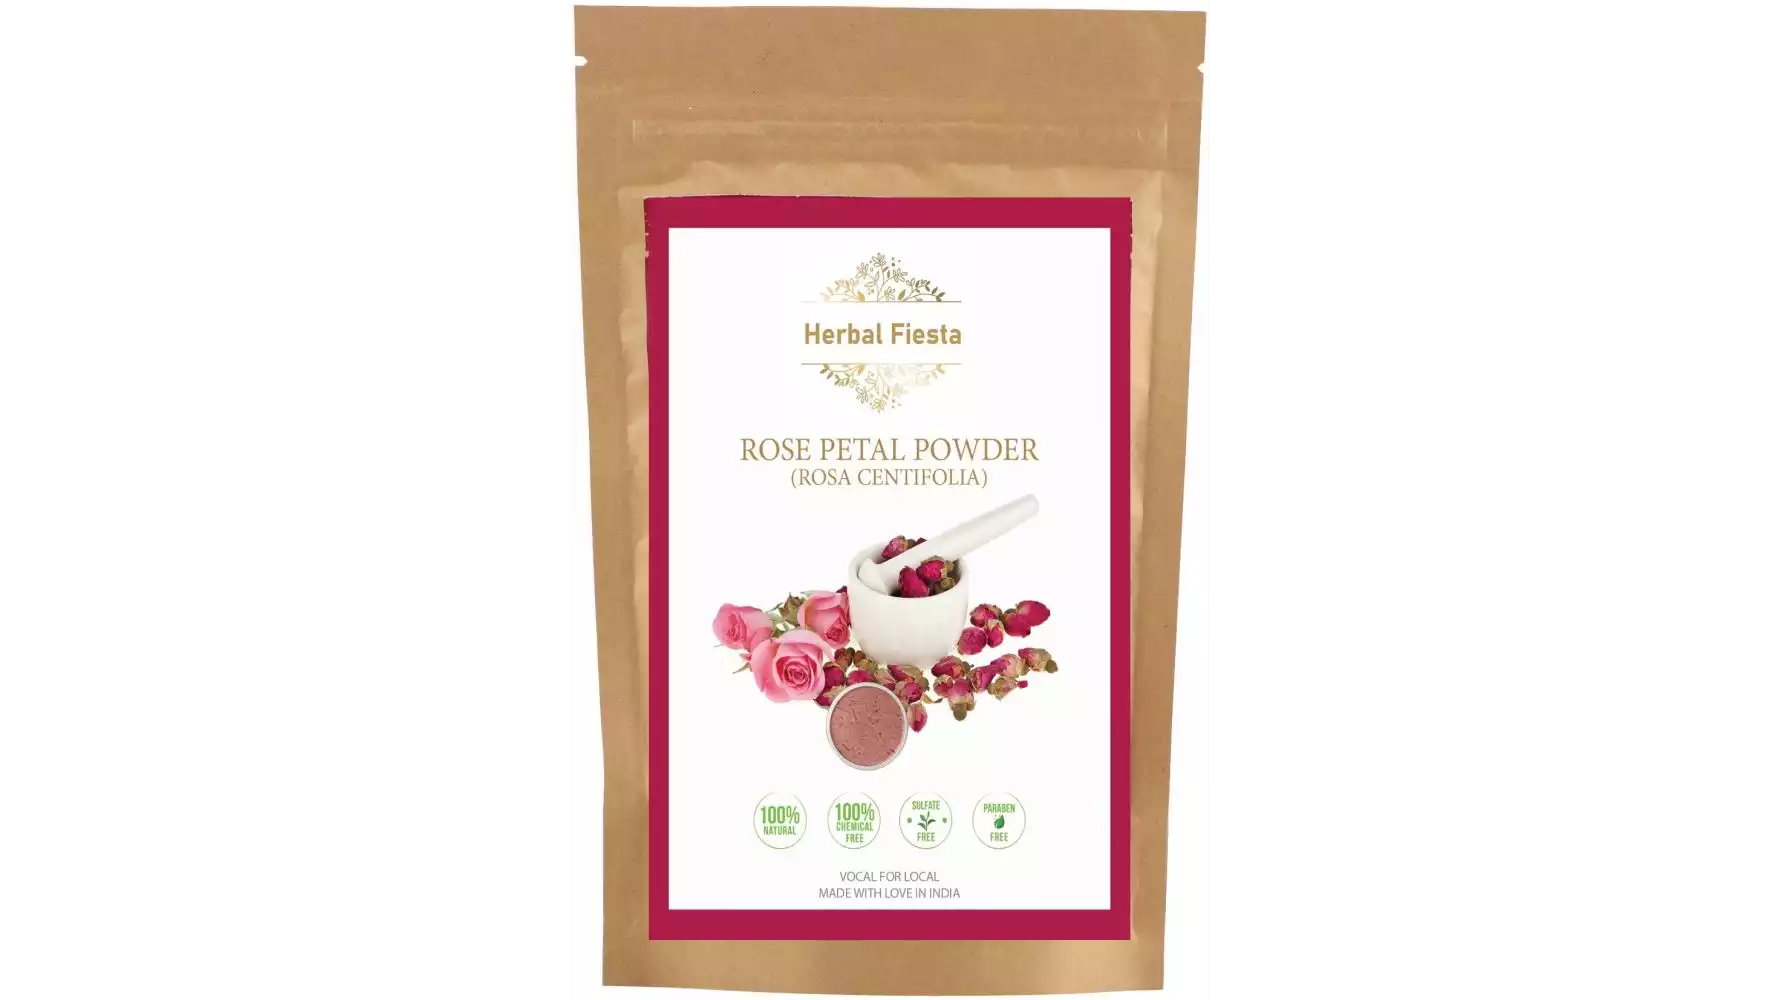 Herbal Fiesta Rose Petal Powder (200g)